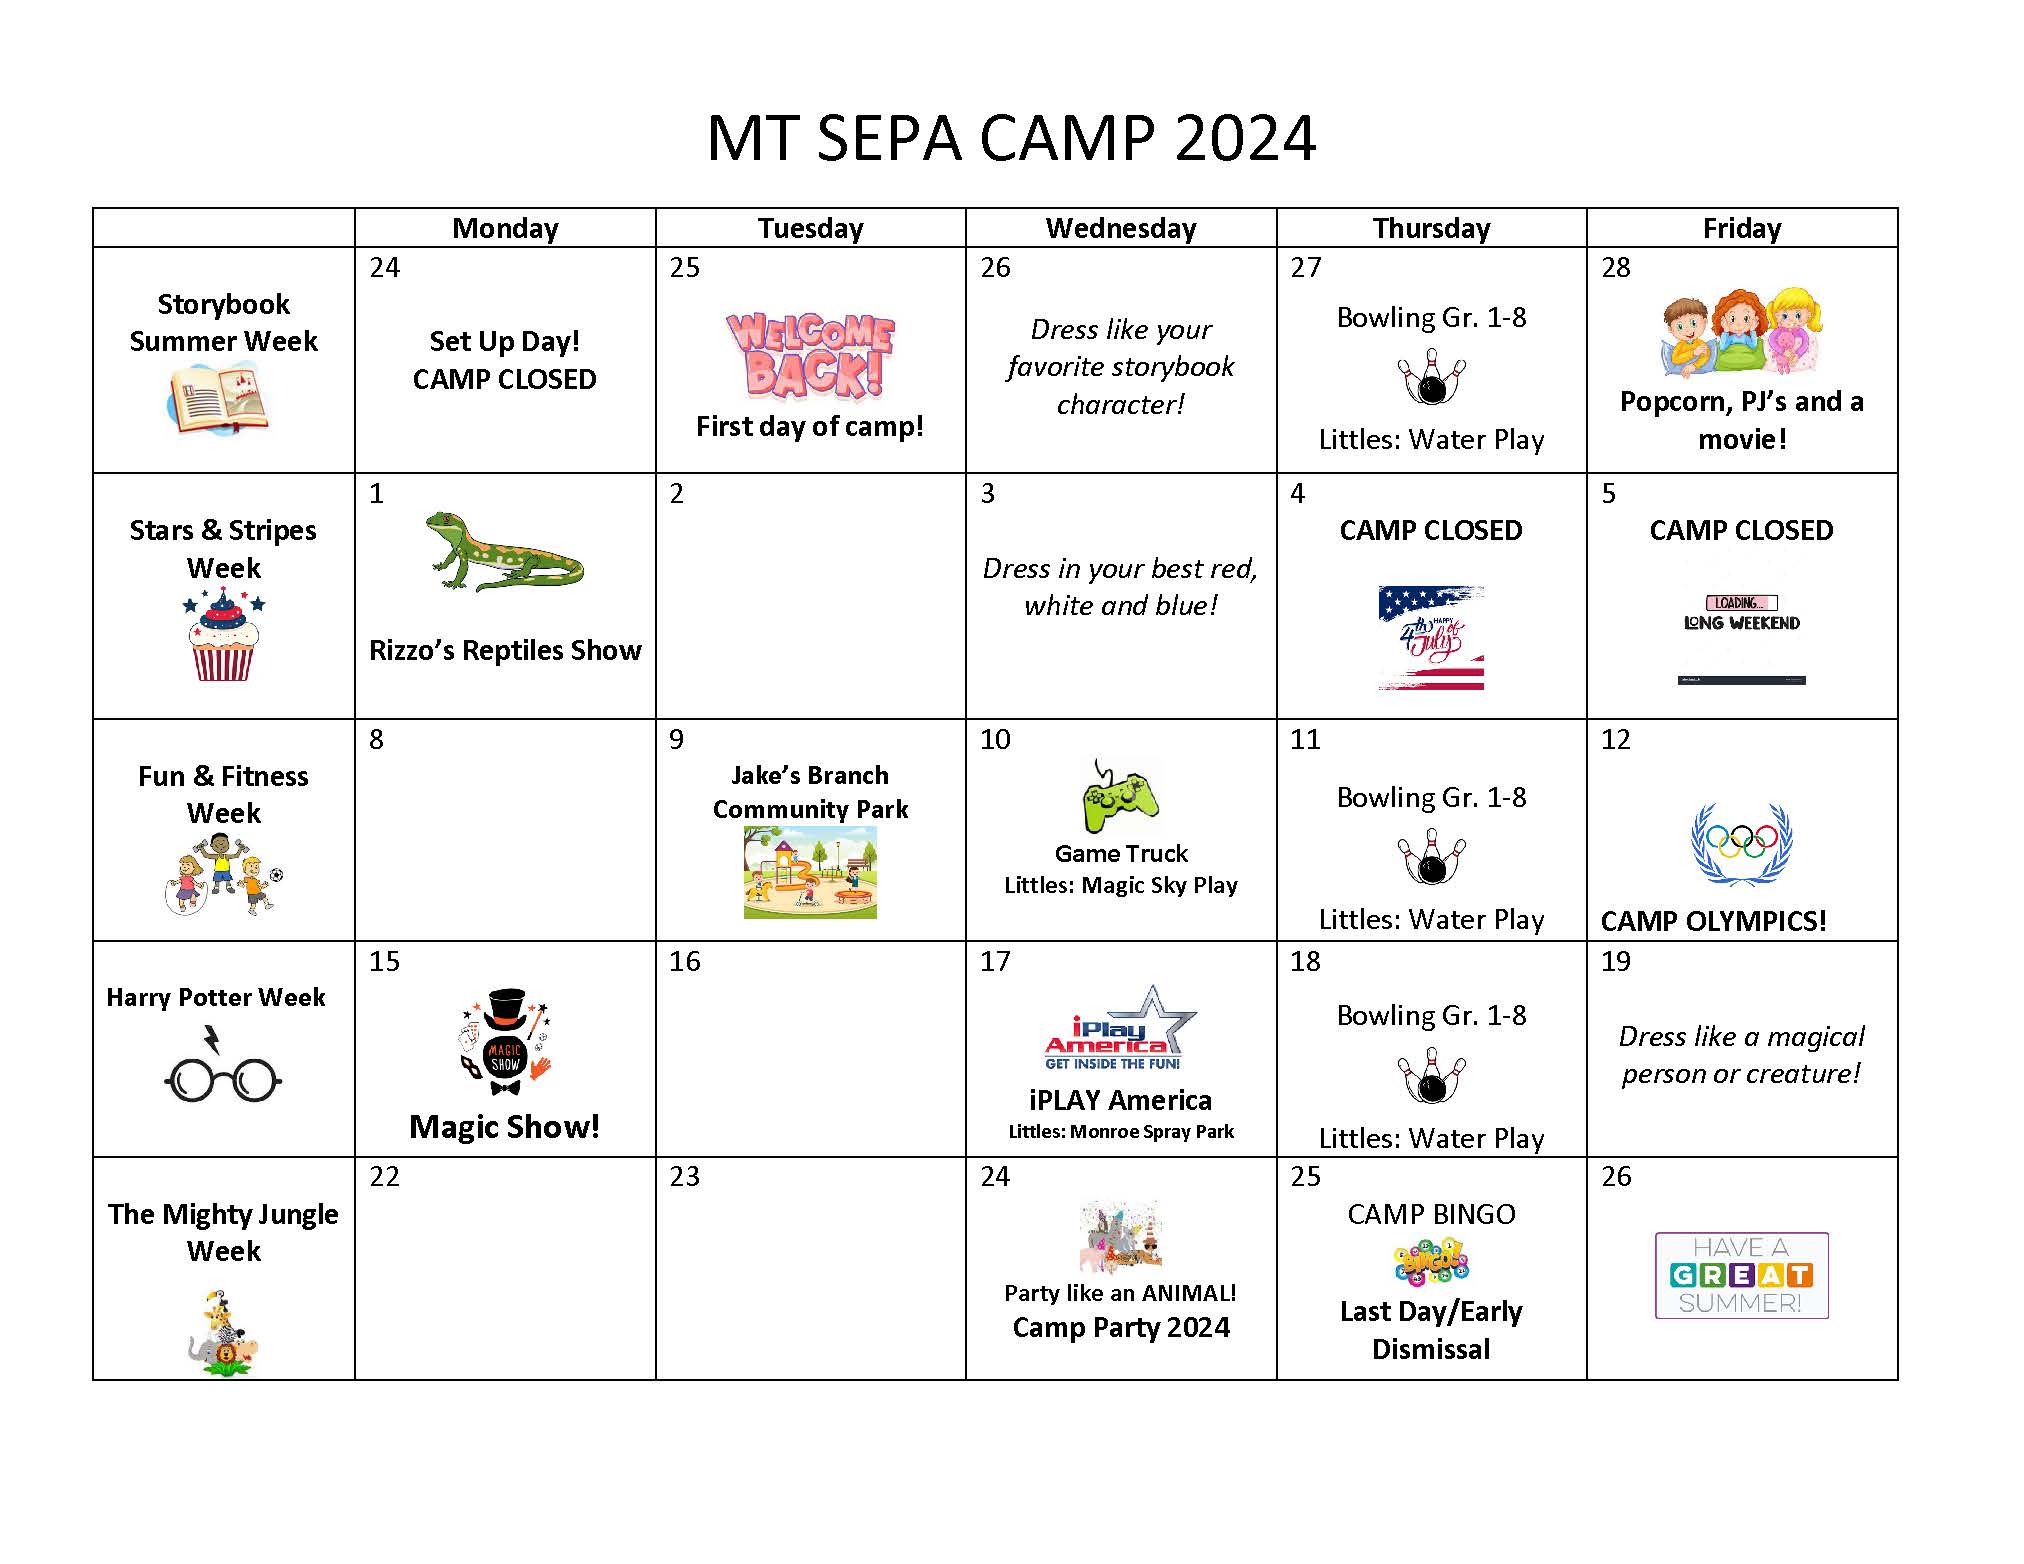 MT SEPA CAMP CALENDAR 2024